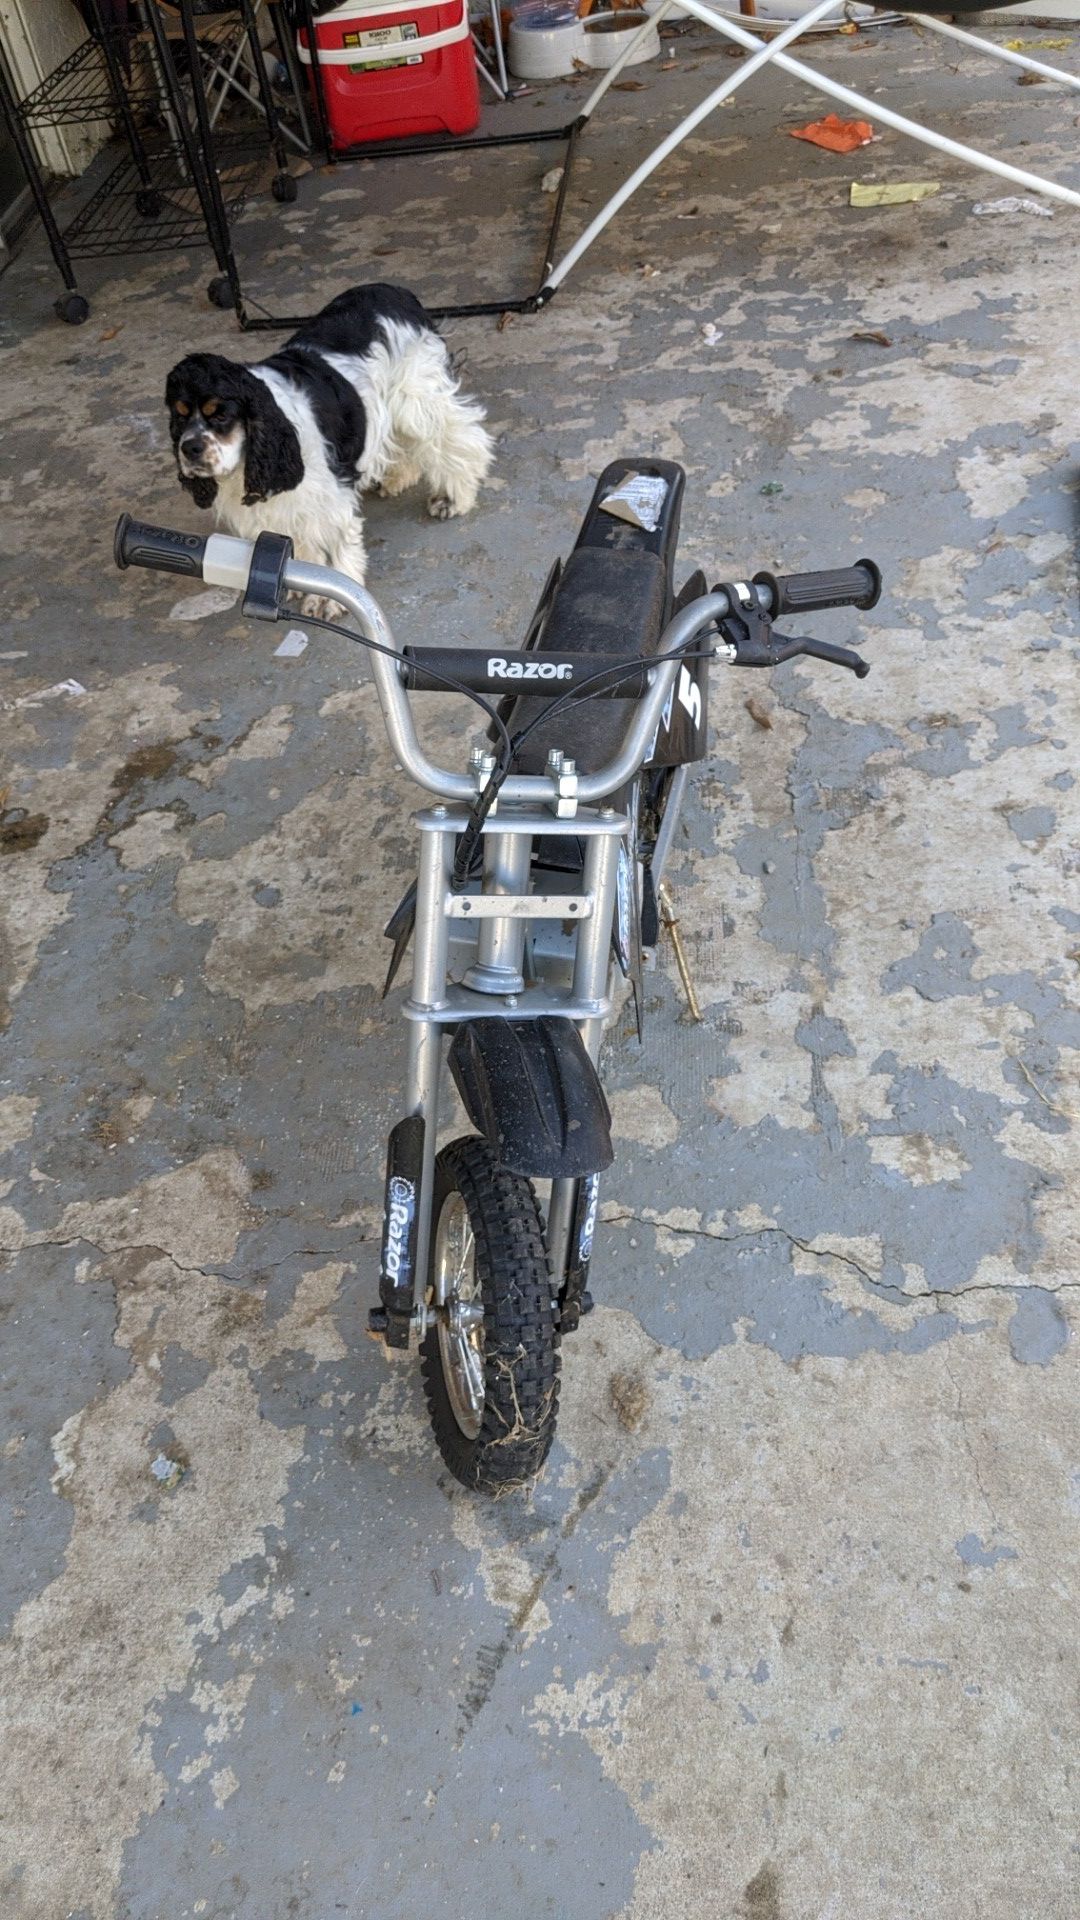 Razor Mx350 dirt bike